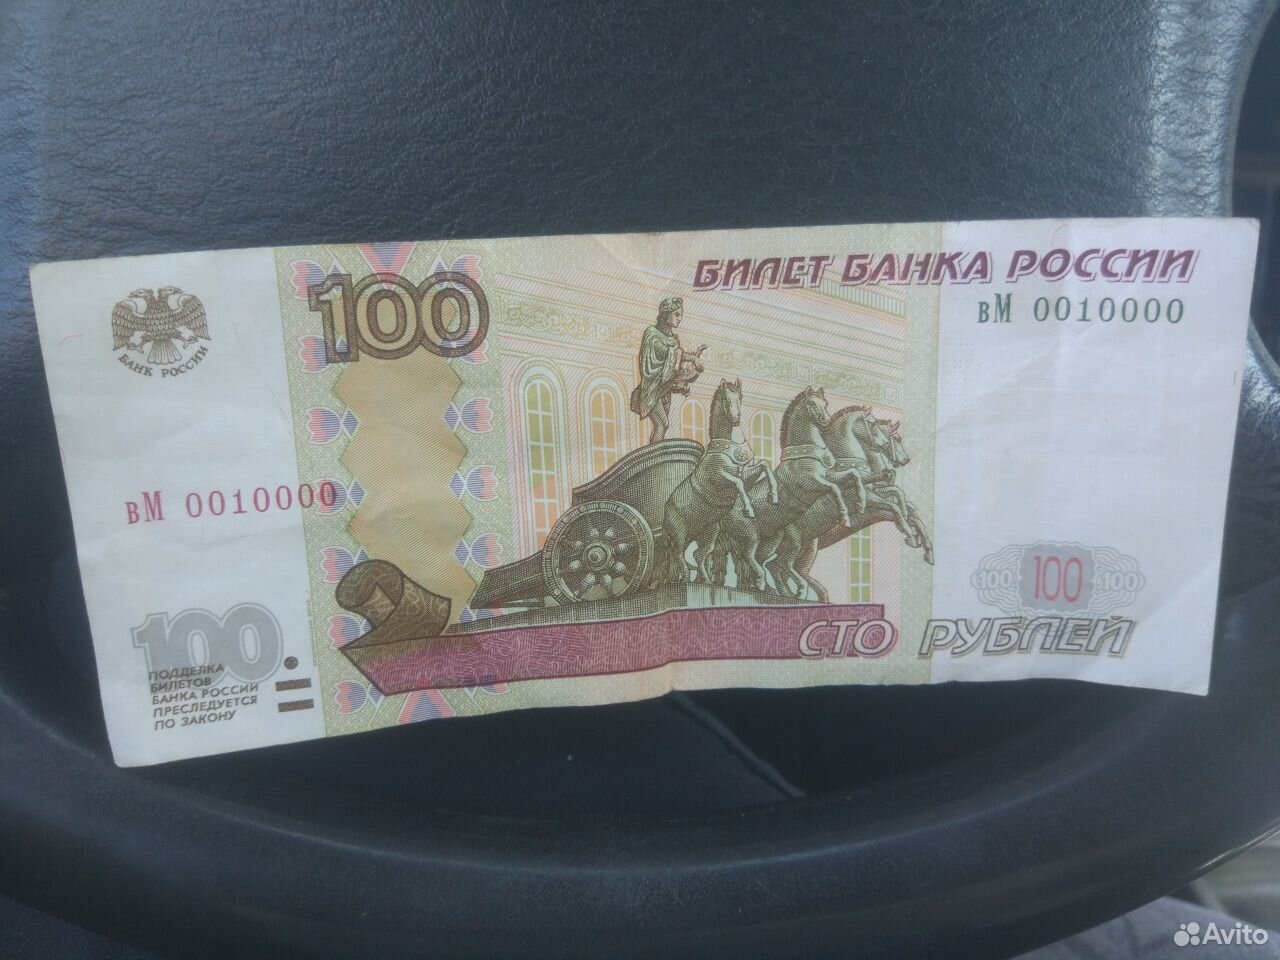 Доставка 500 рублей